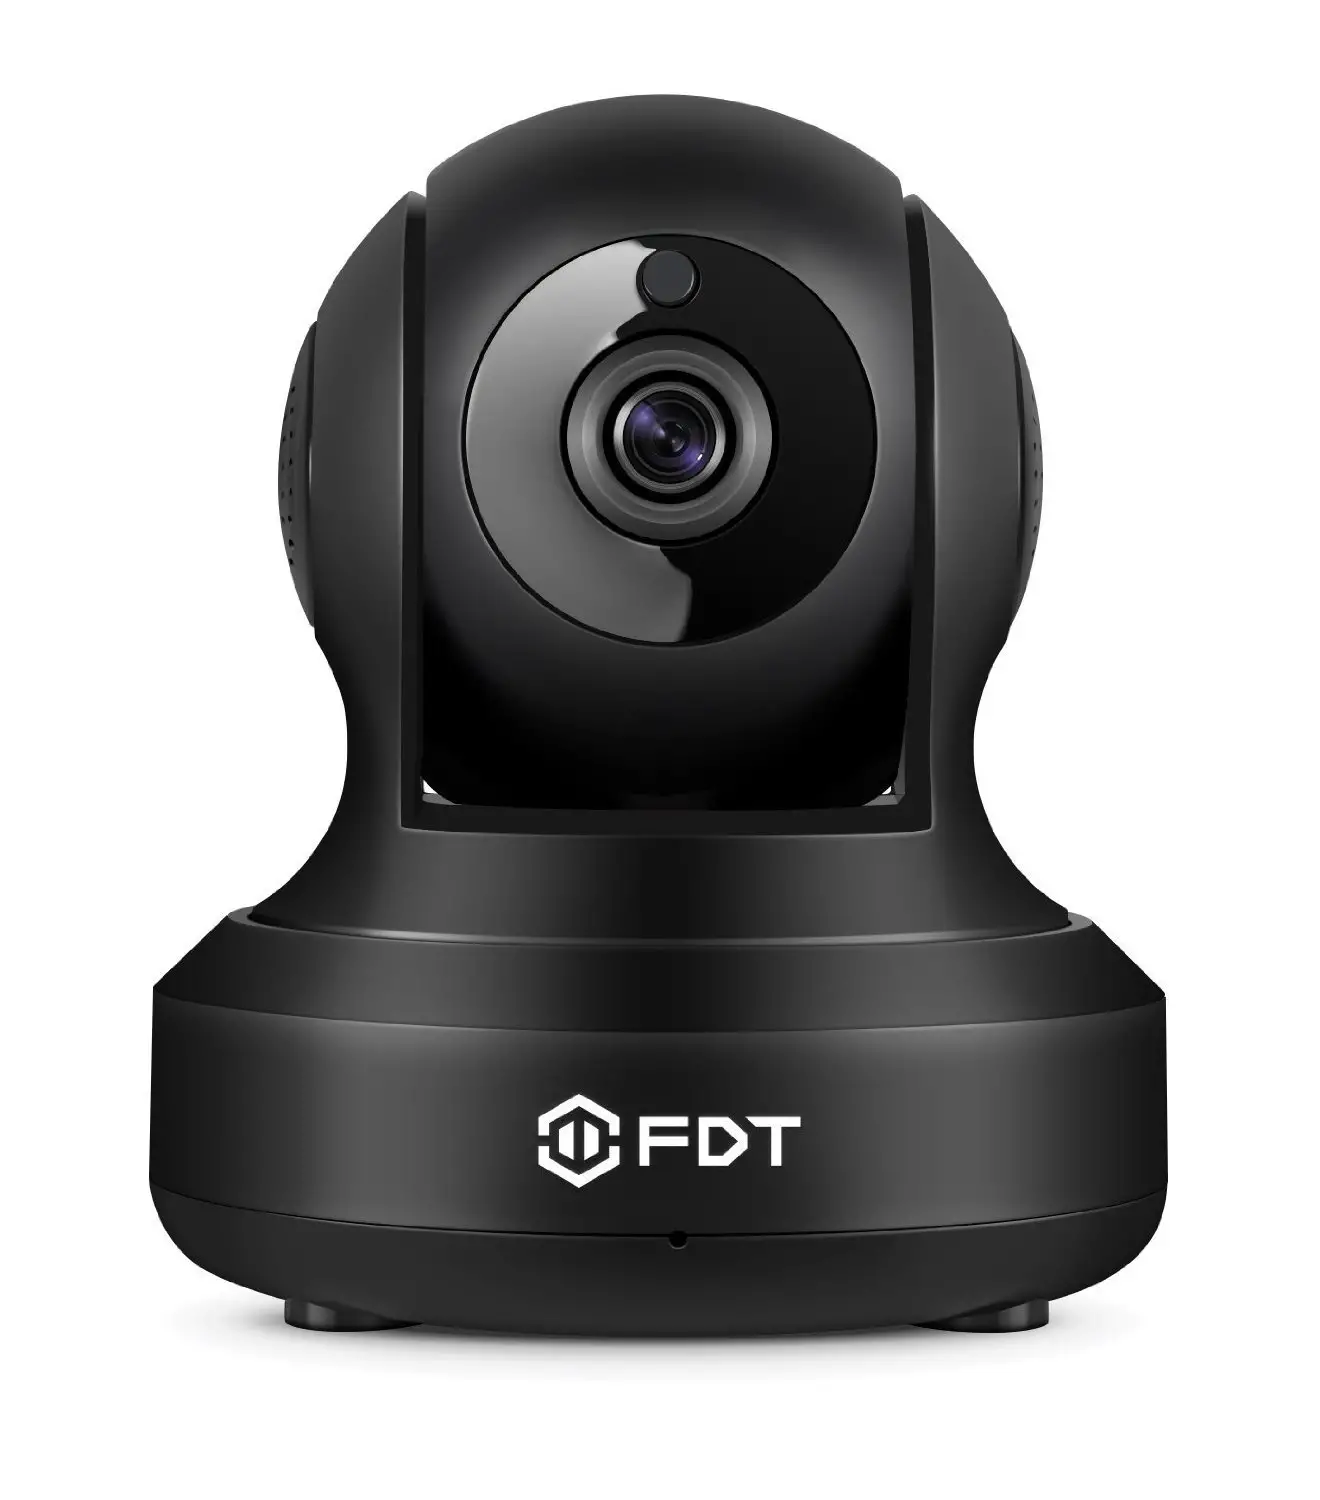 FDT 720P HD WiFi Pan/Tilt IP Camera